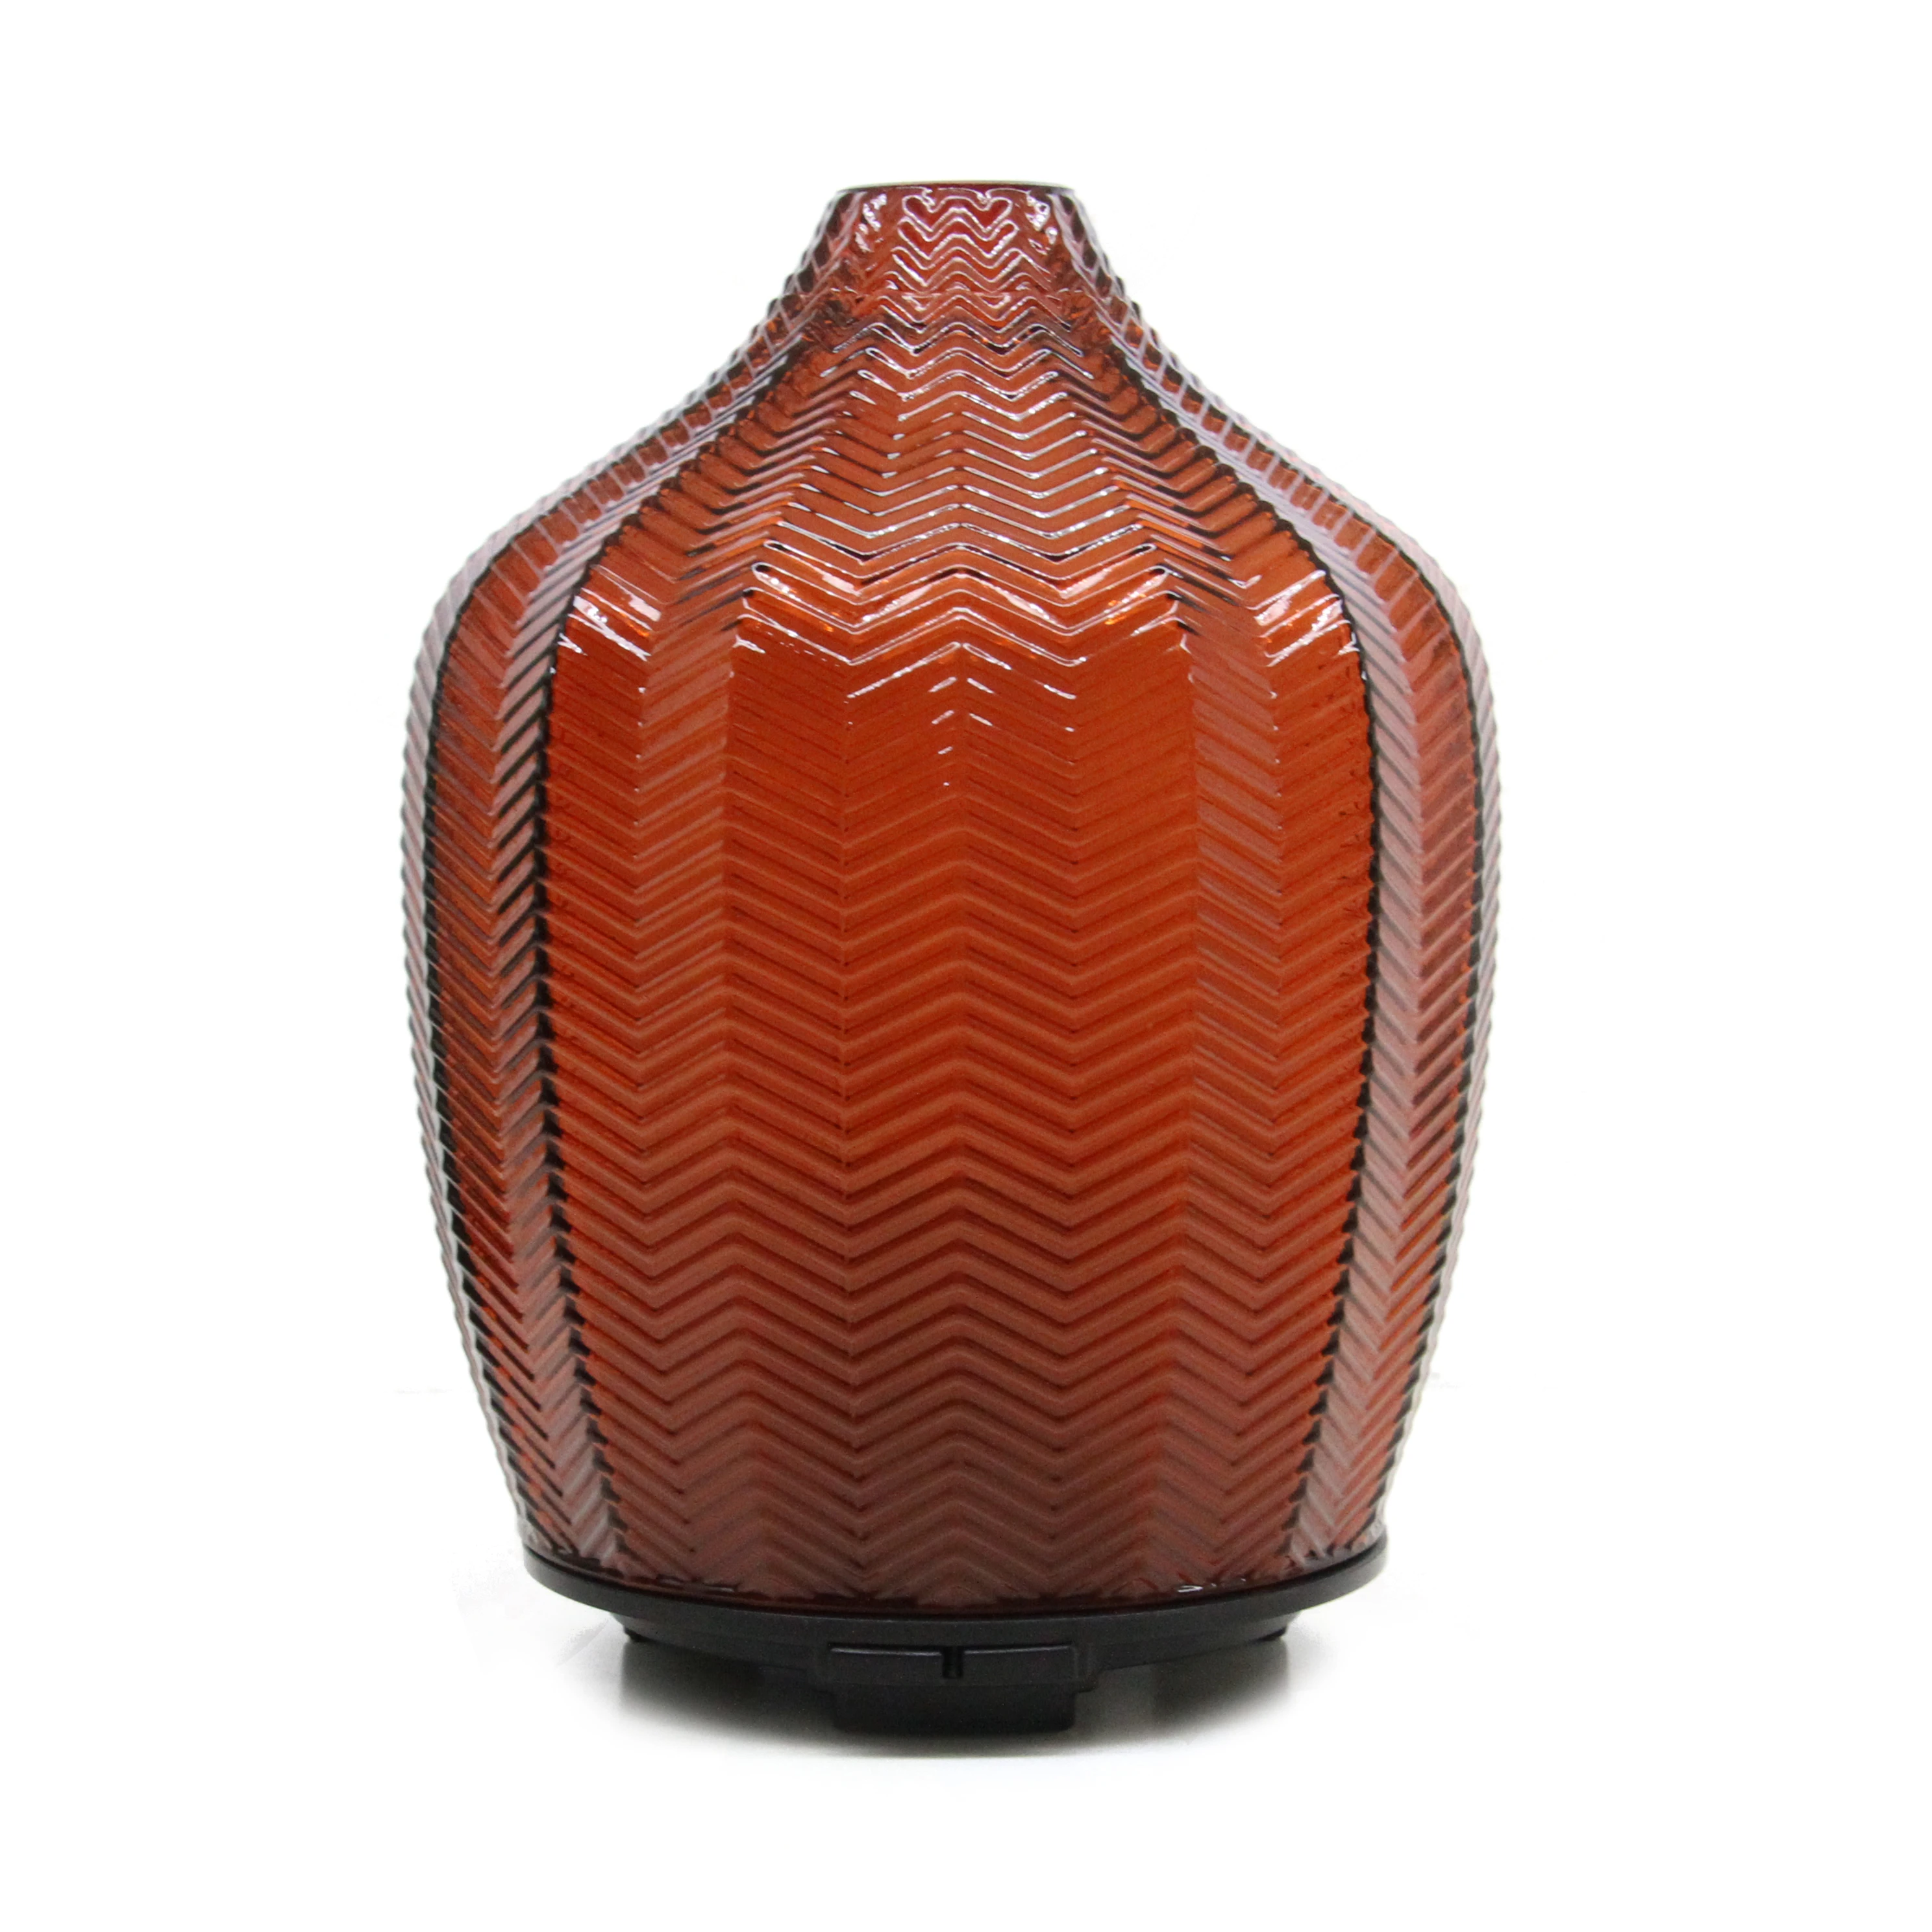 Populär Art Glass Air Aroma Diffuser Essential Oil Ultrasonic Luftbefeuchter